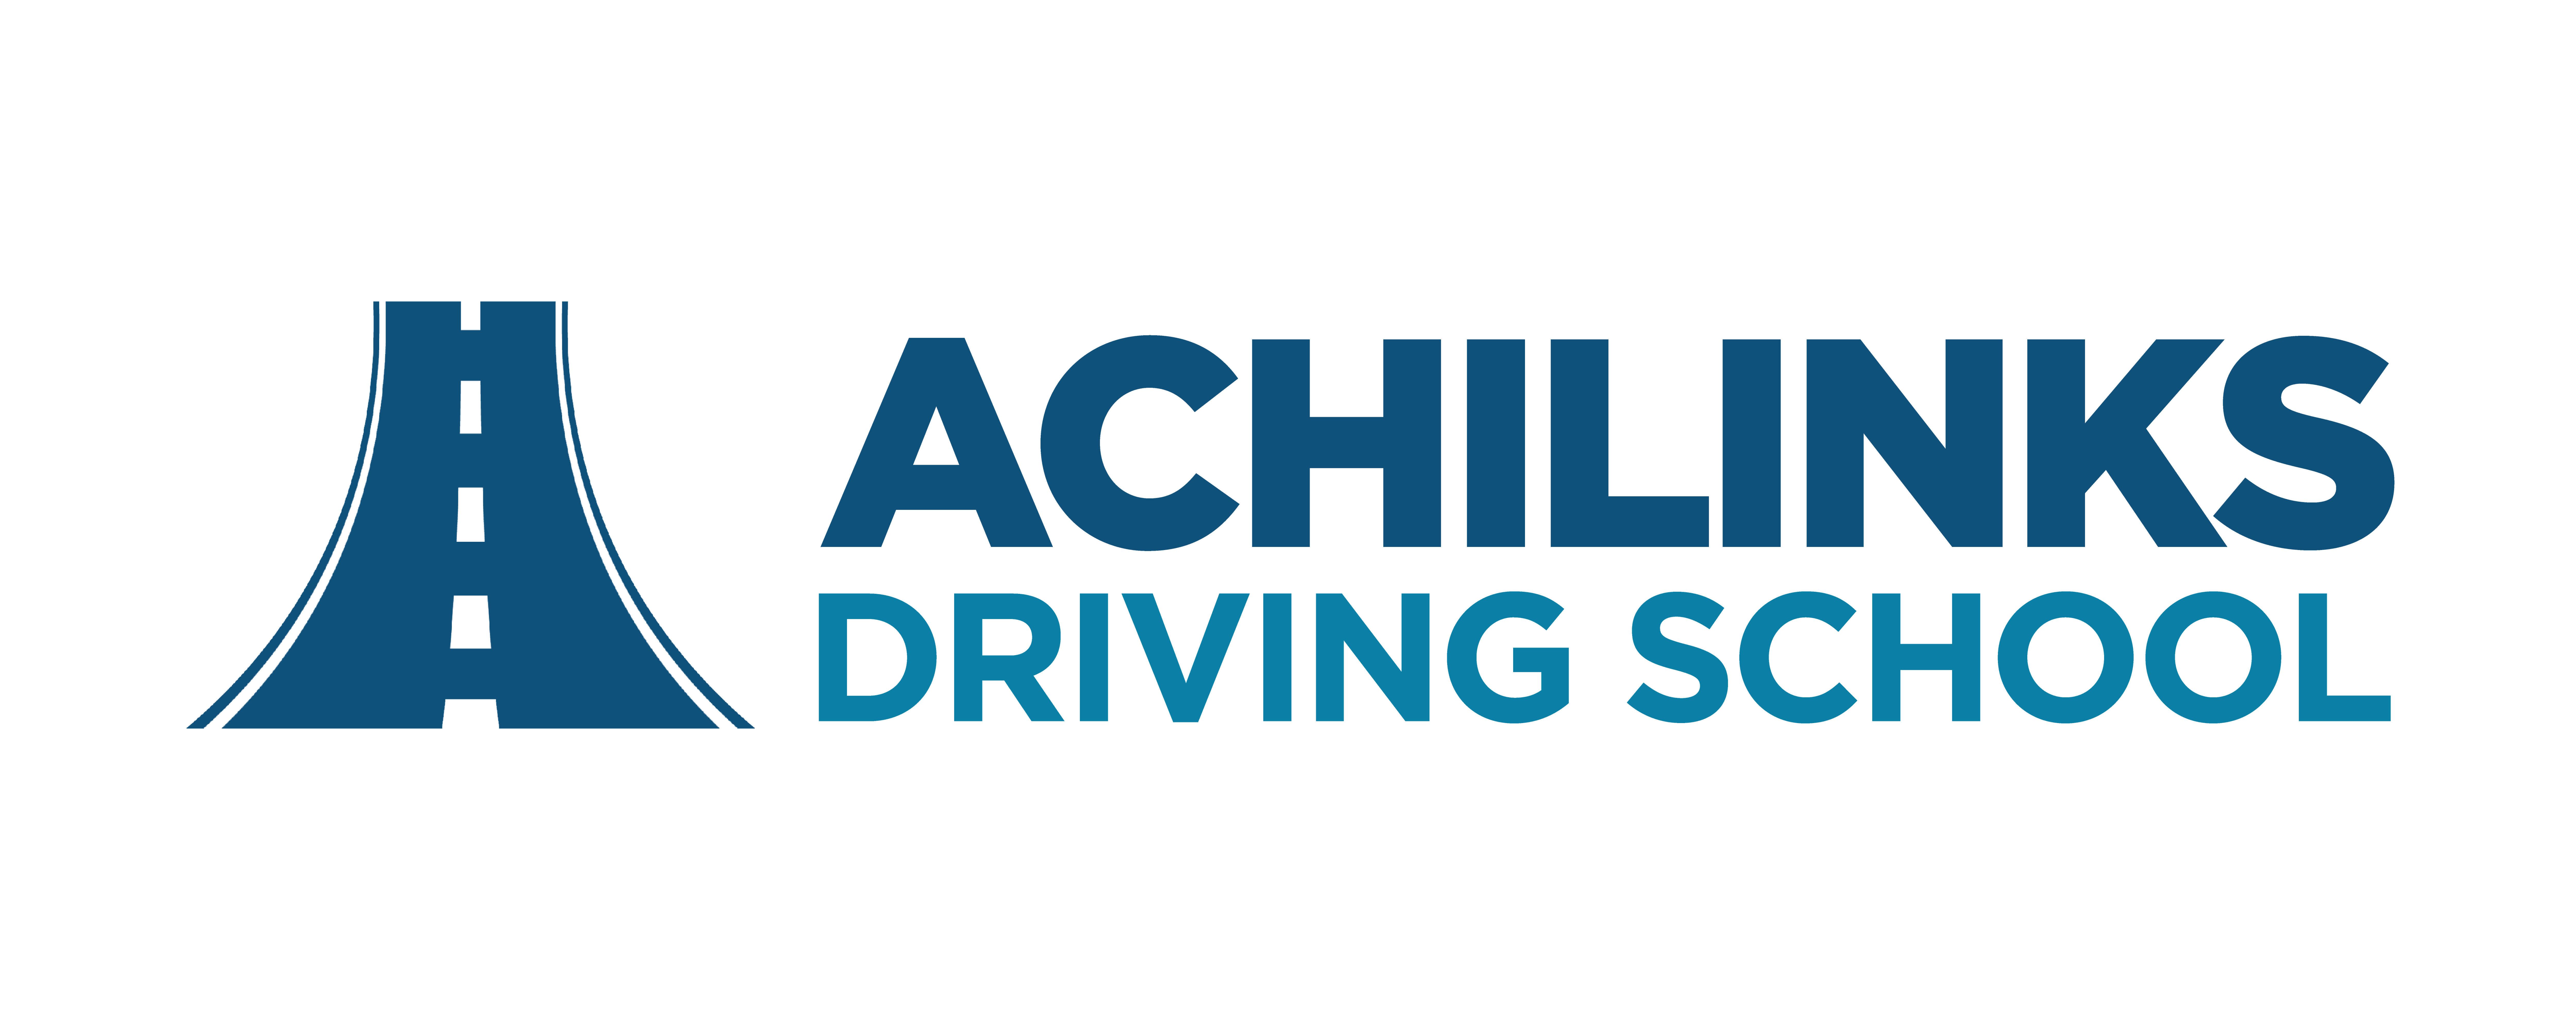 Achilinks Driving School